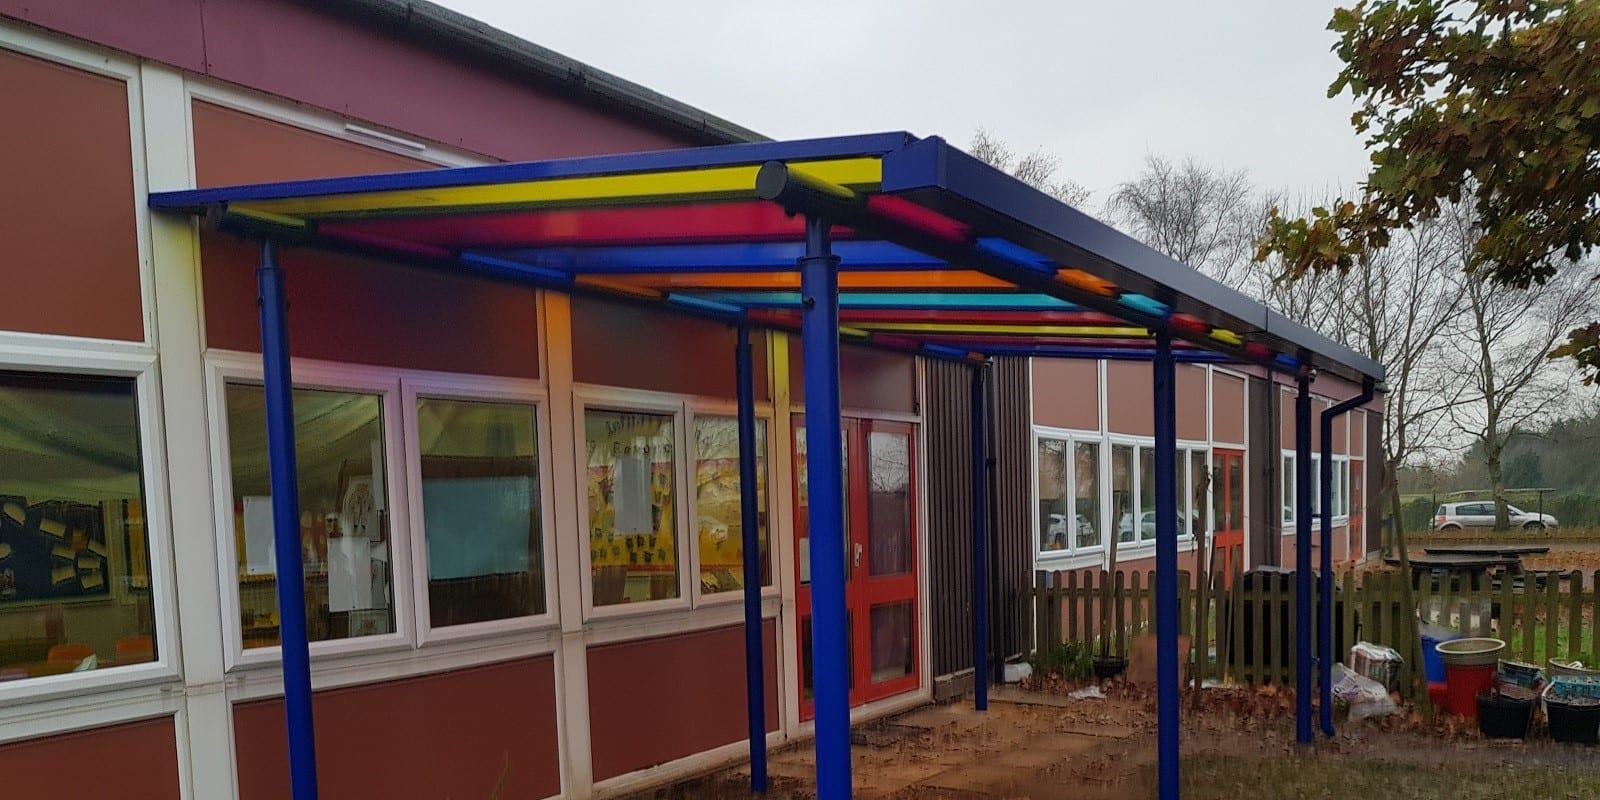 Shelter we designed for Blenheim Park Academy